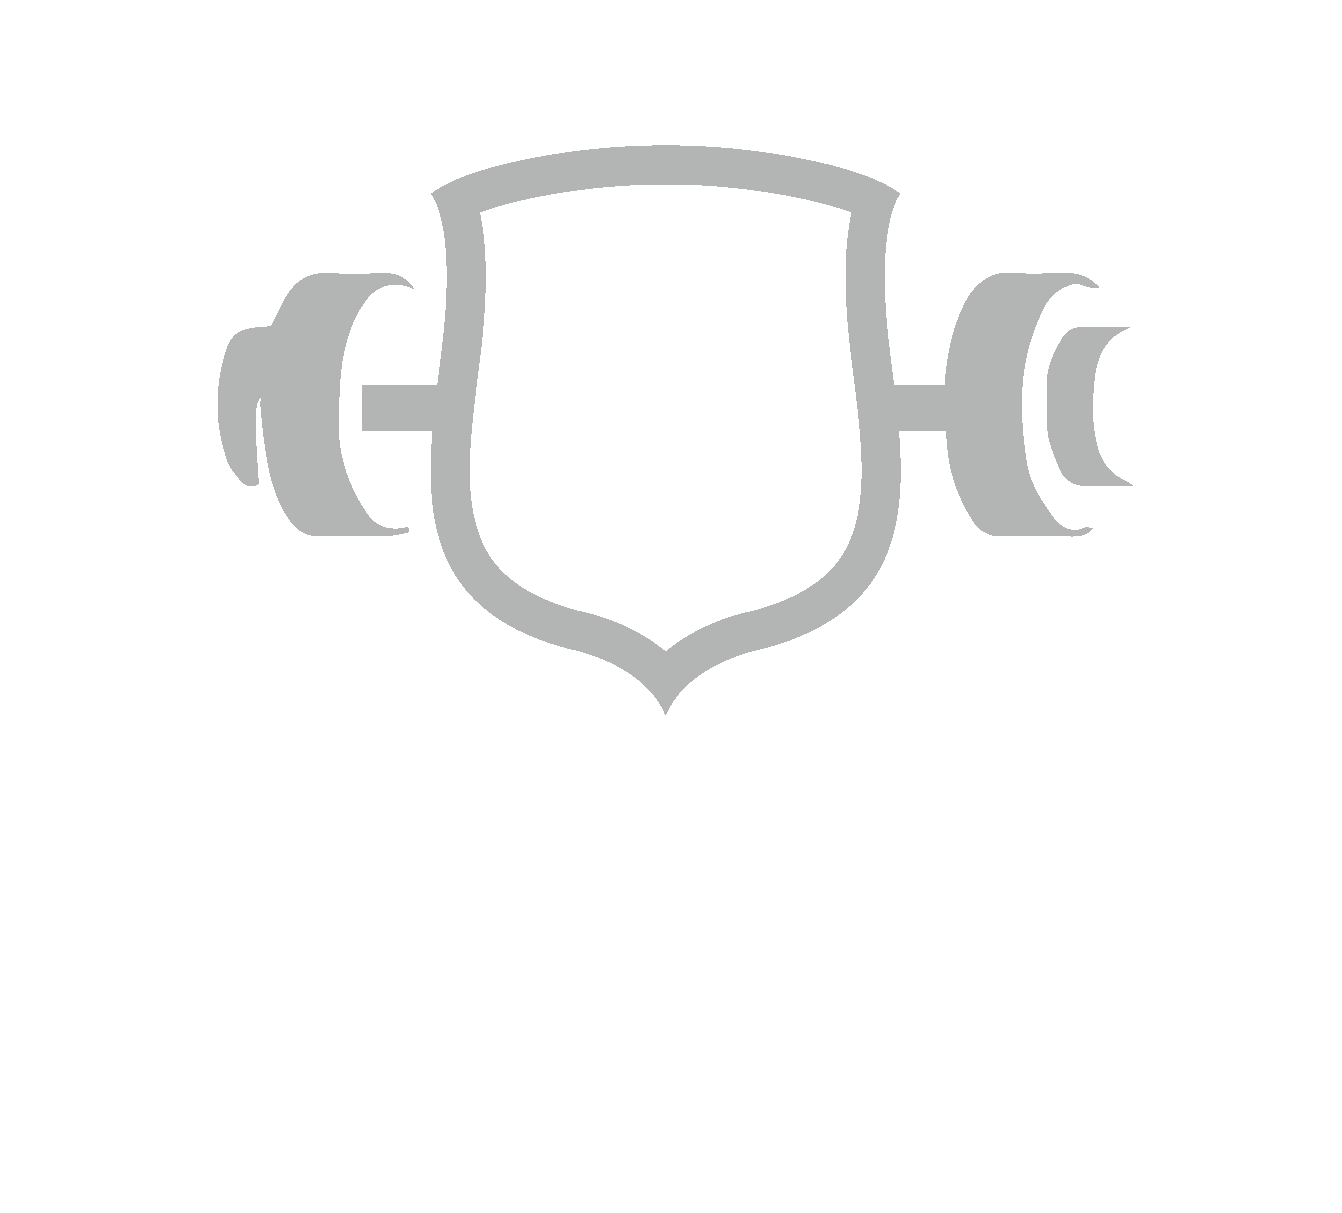 EC Performance Training